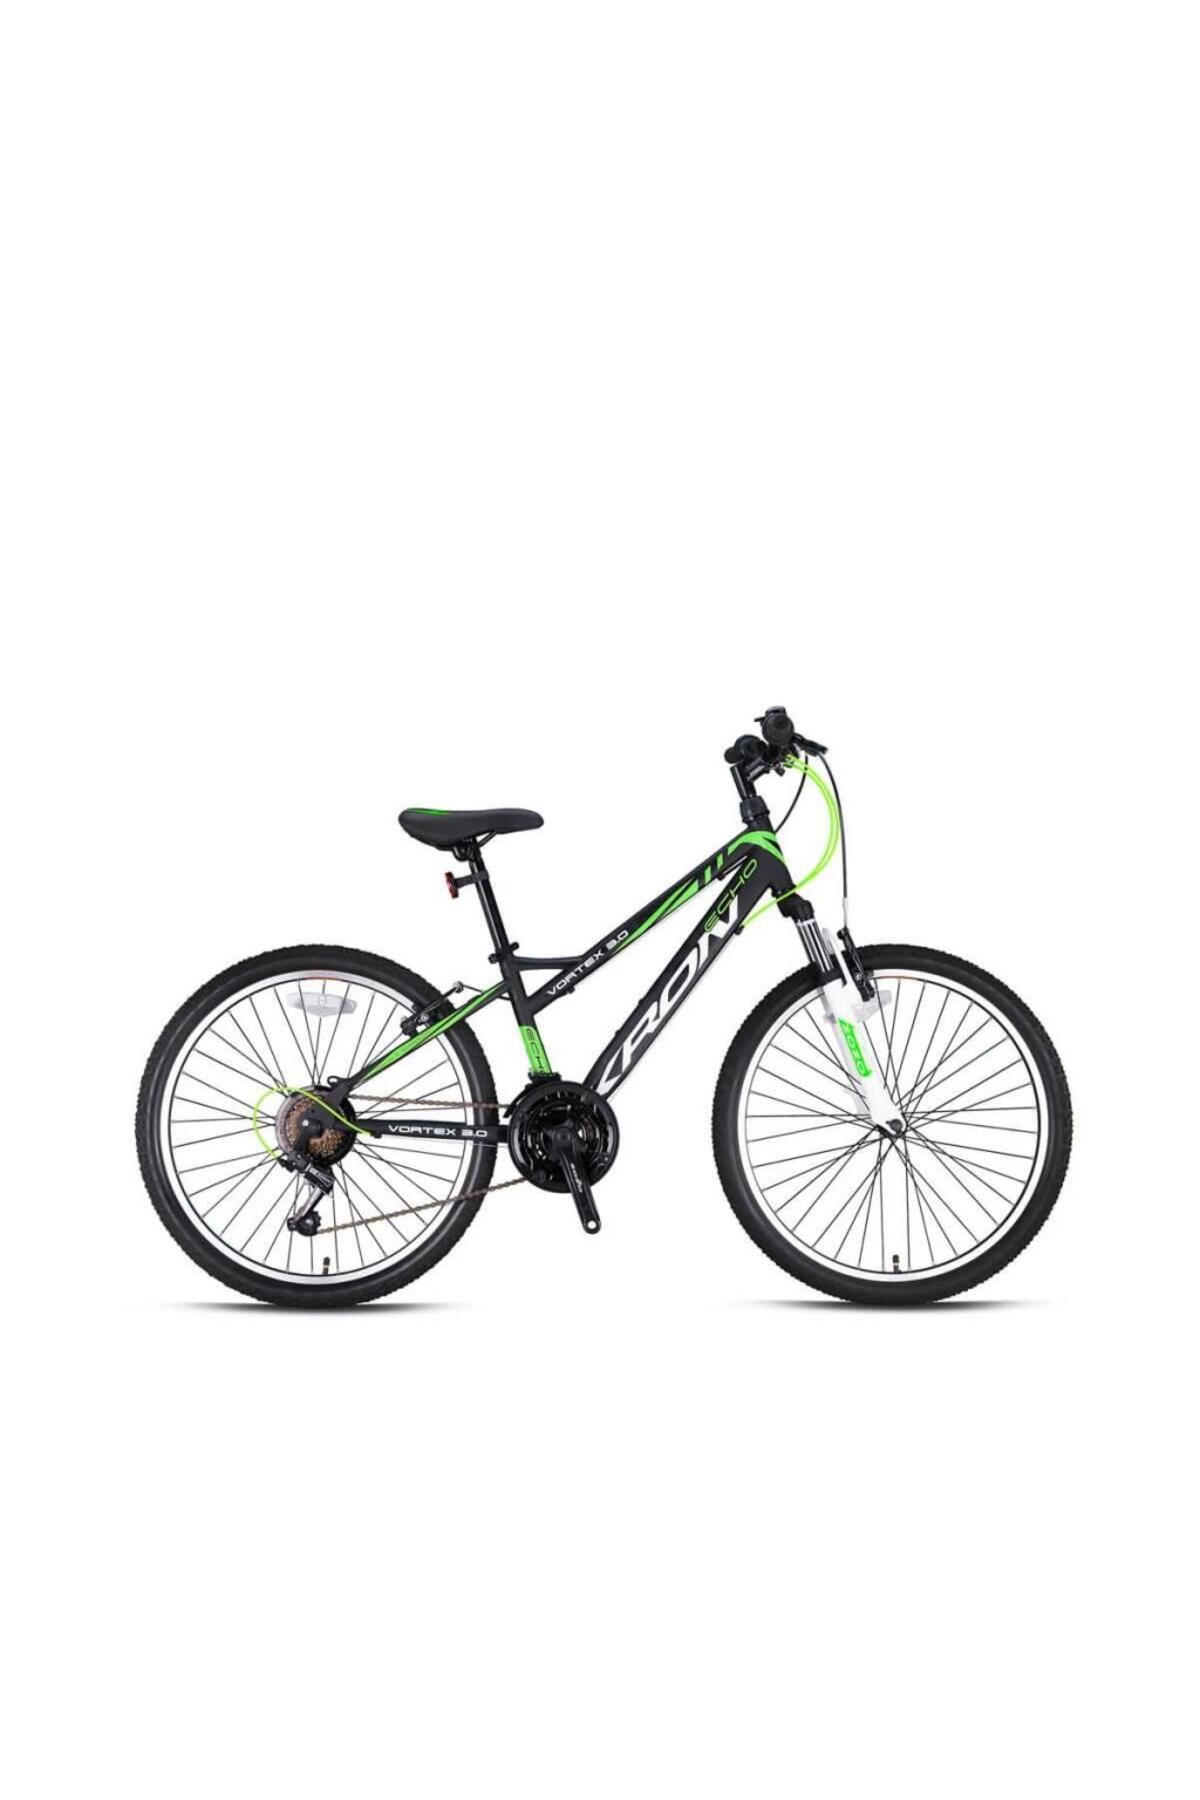 Kron Vortex 3.0 Çocuk Bisikleti 20 Jant Mat Siyah - Yeşil